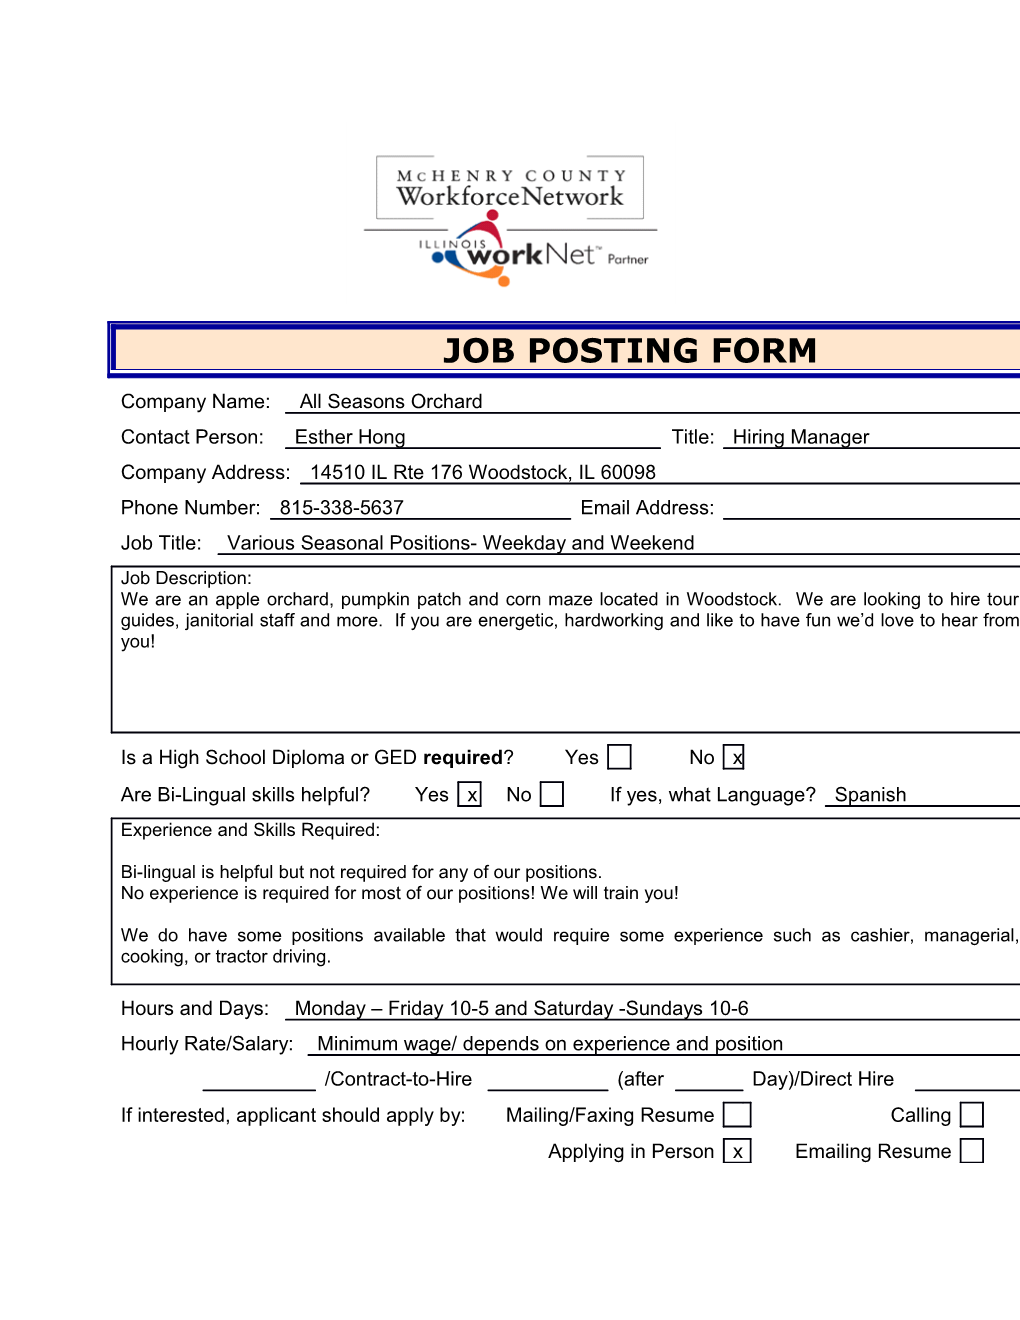 Job Posting Form s2